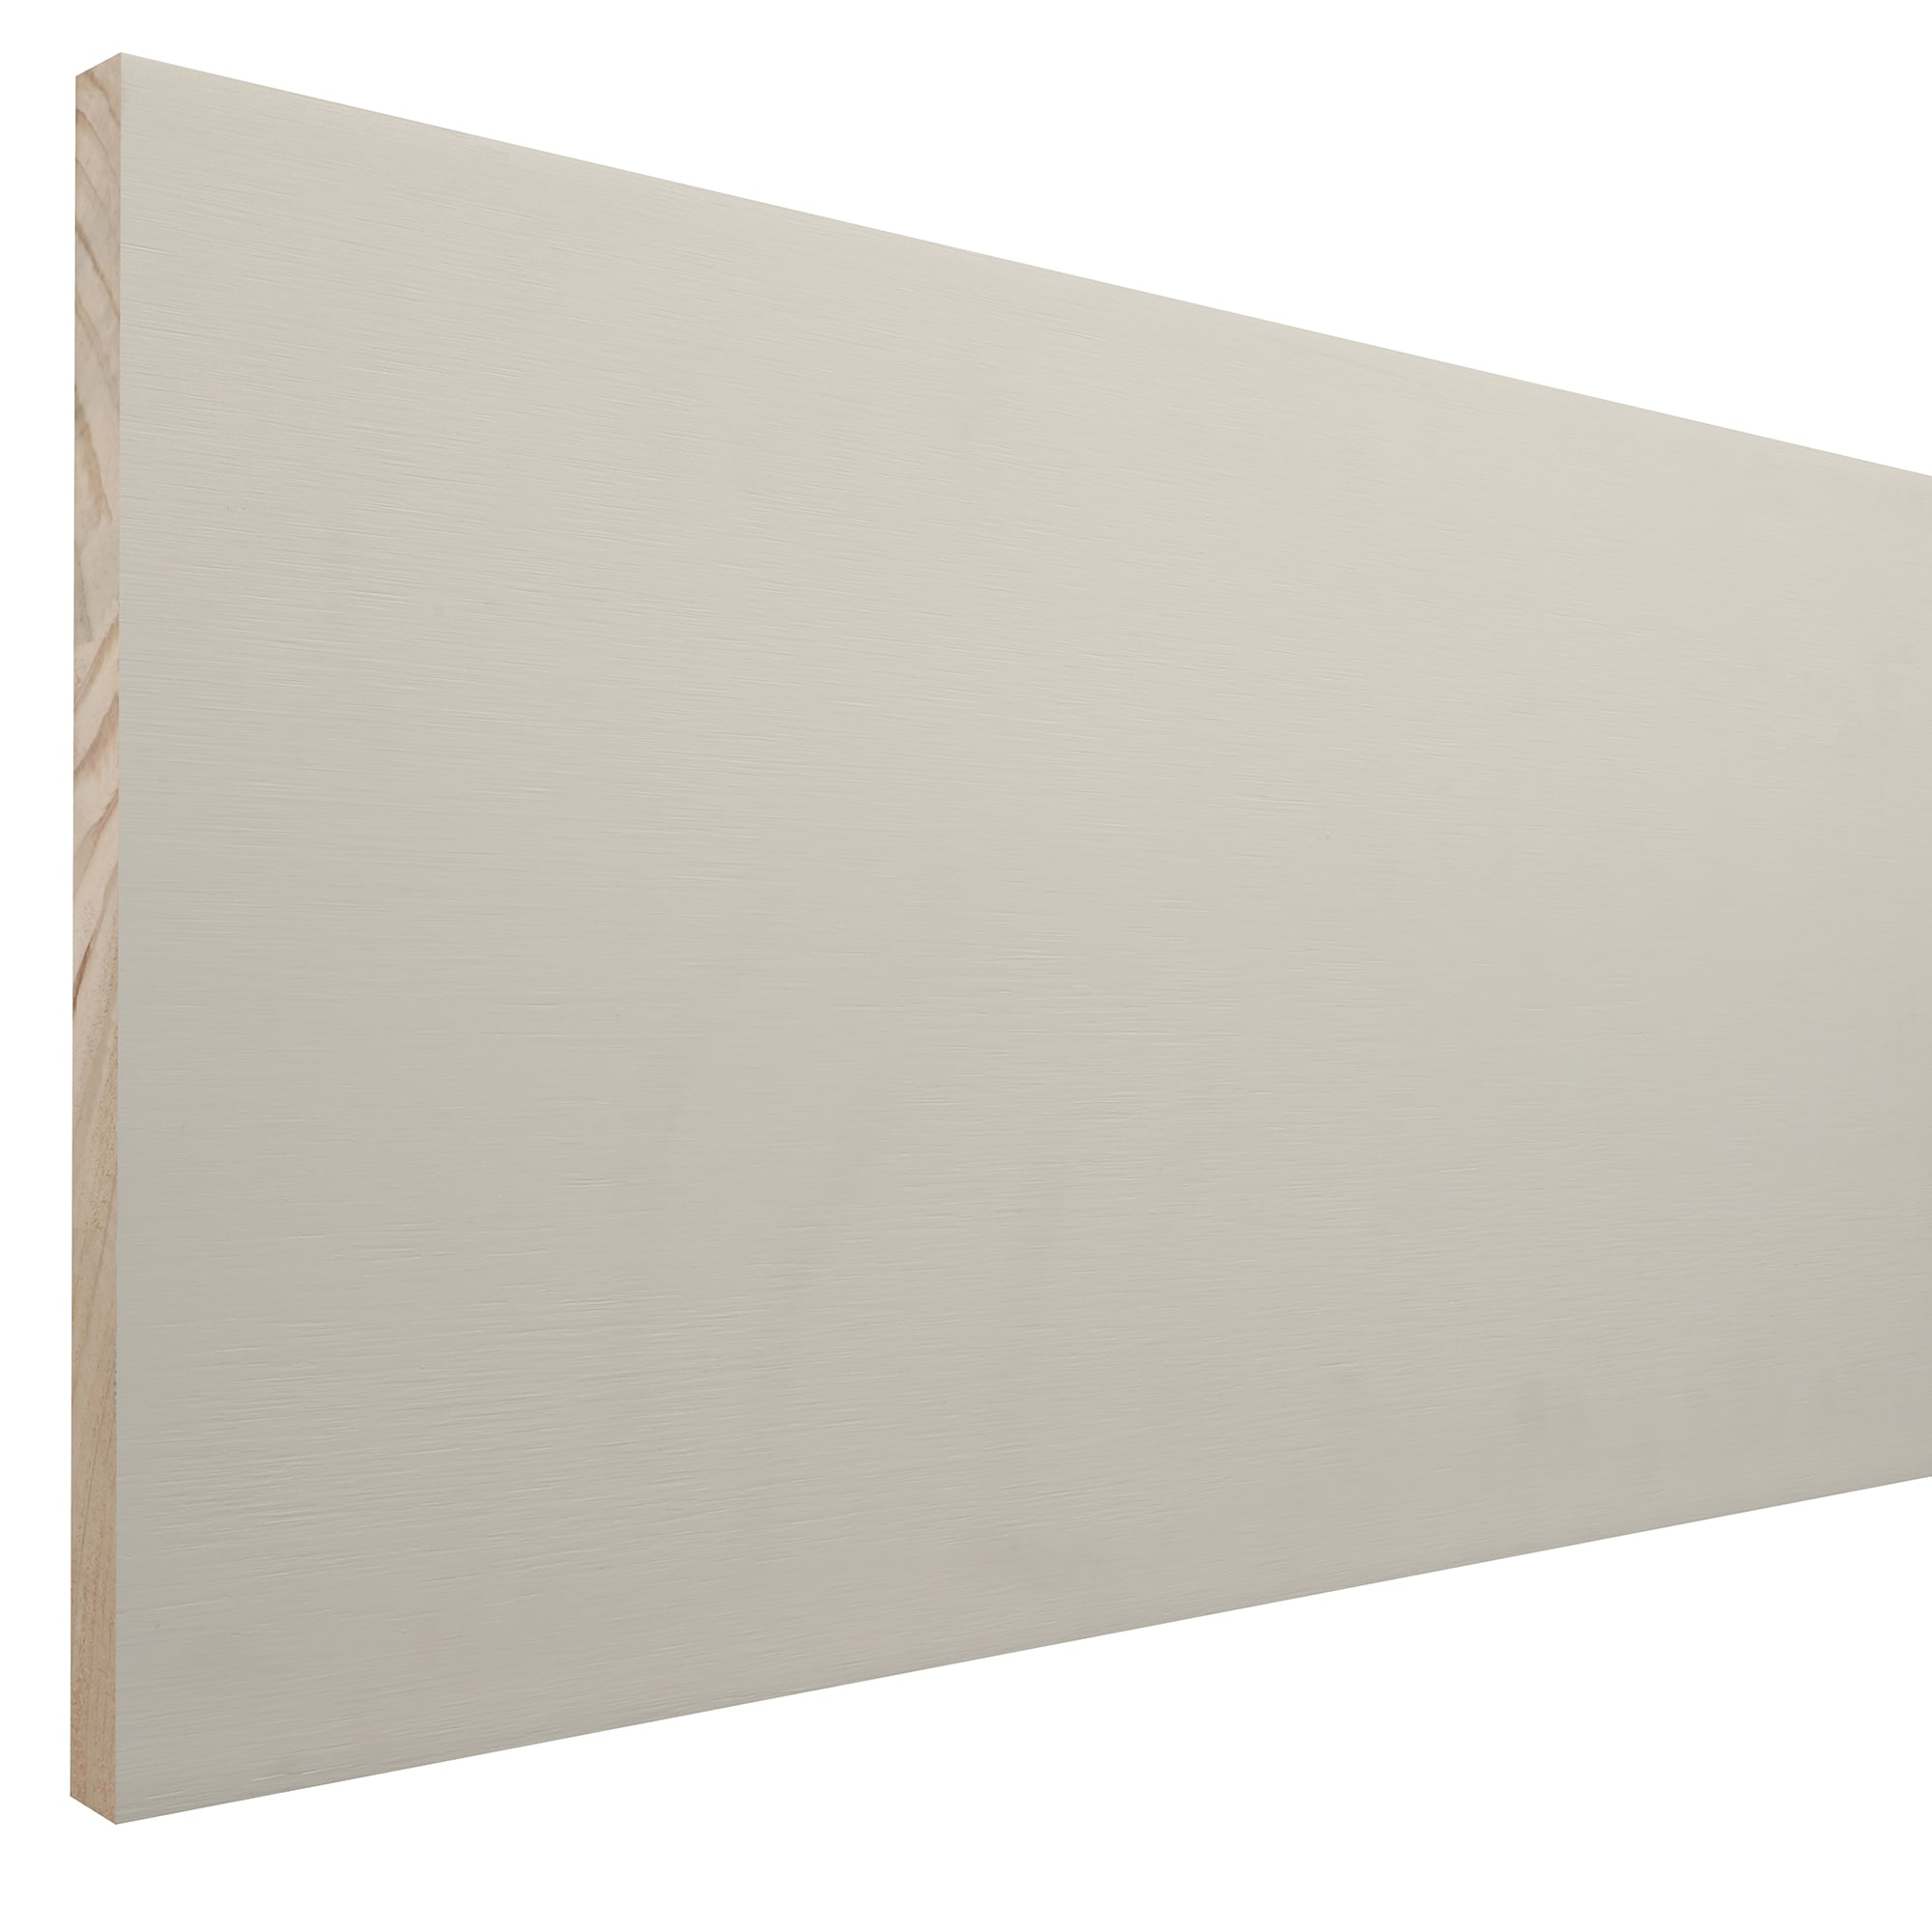 RELIABILT 1-in x 12-in x 8-ft Primed MDF Board in the Appearance